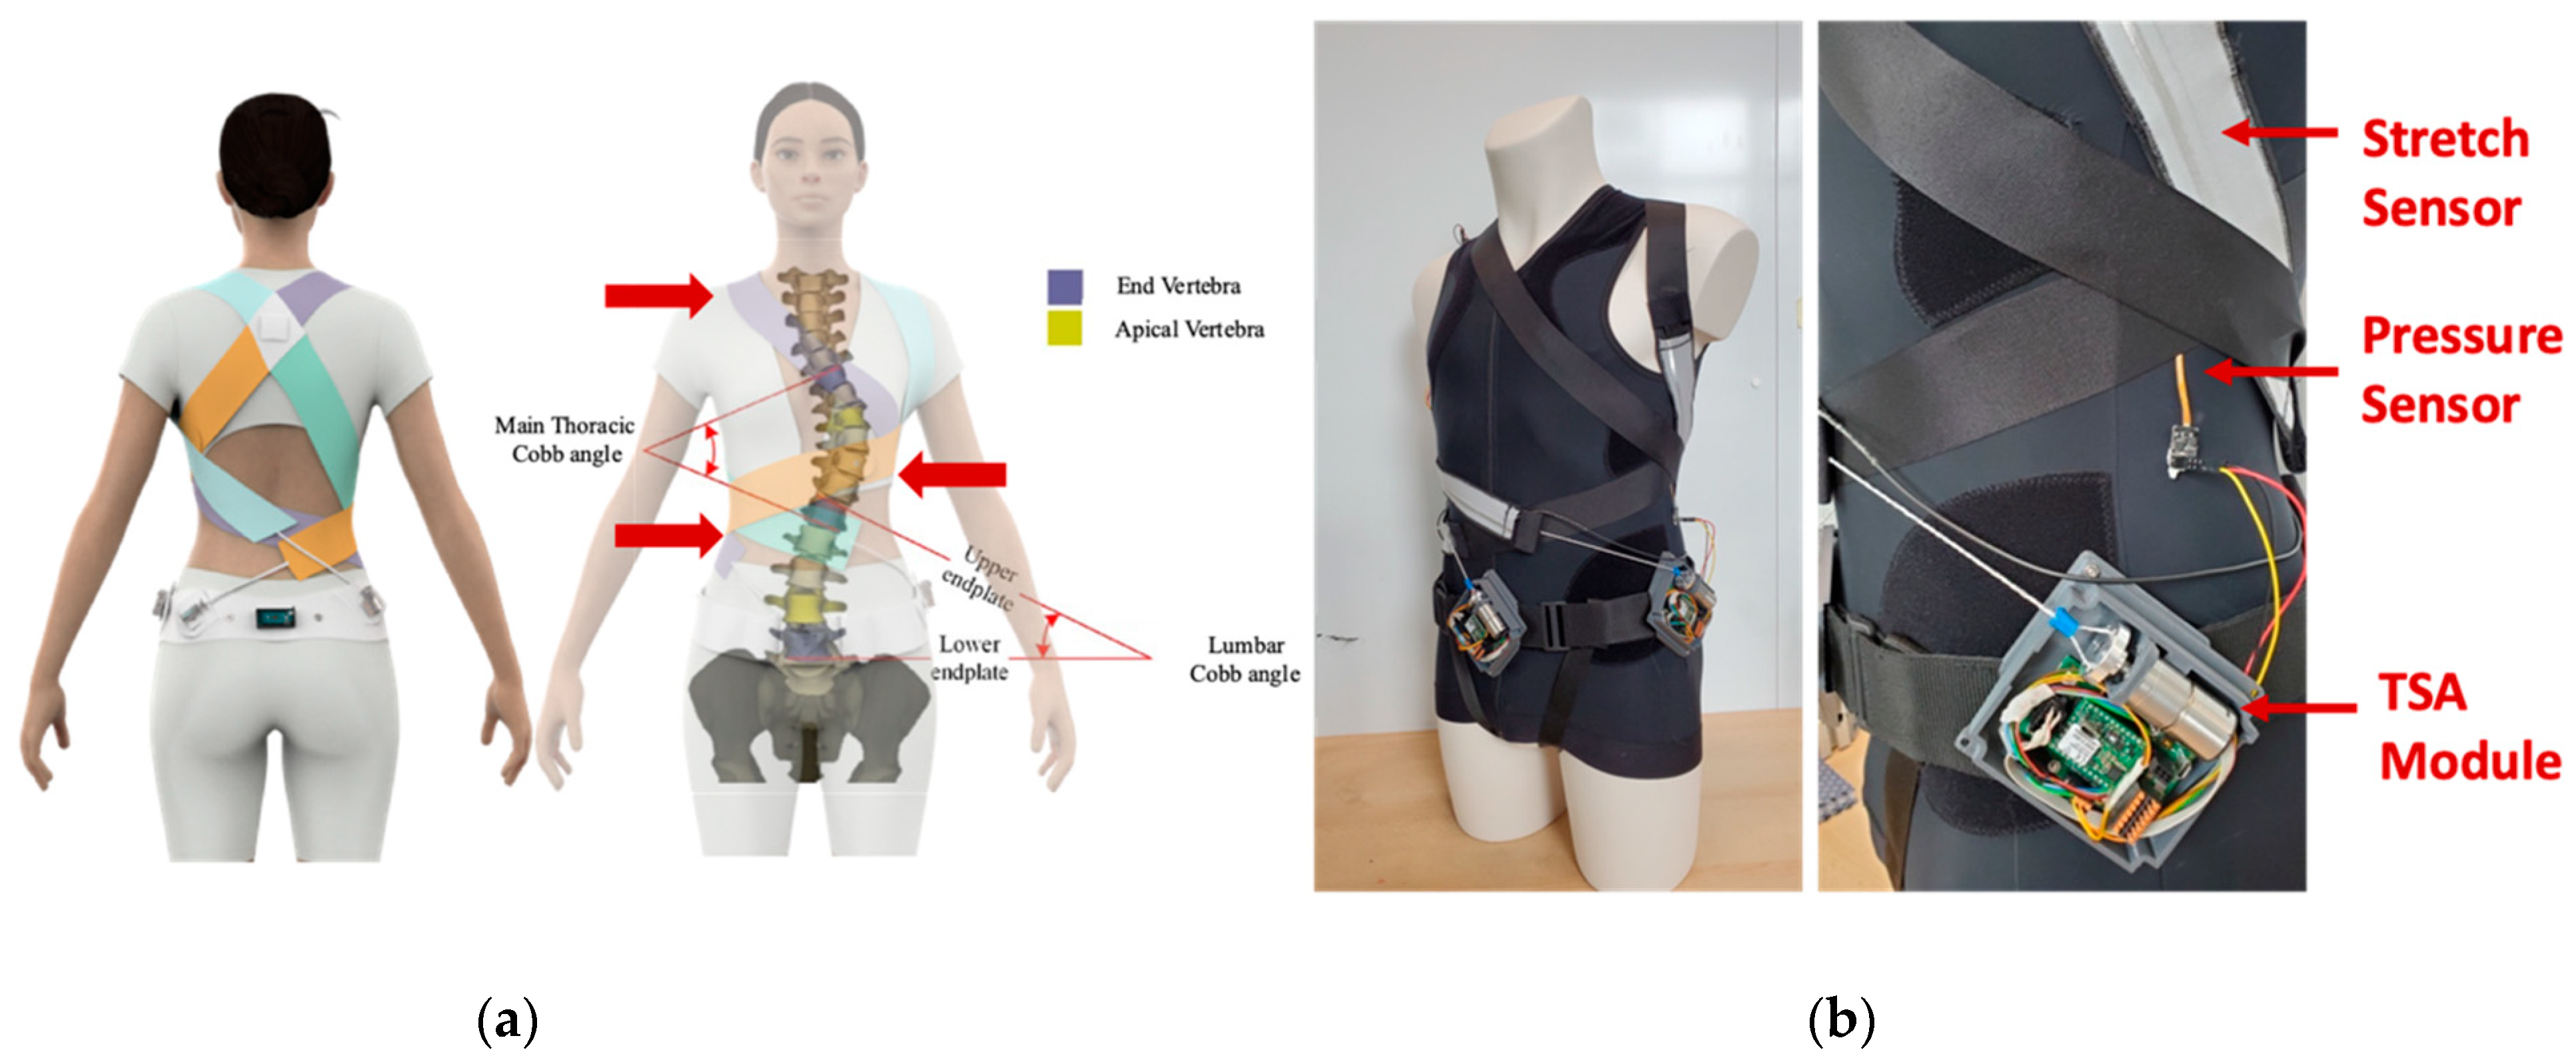 Engineering students focus on scoliosis brace comfort, fit, design